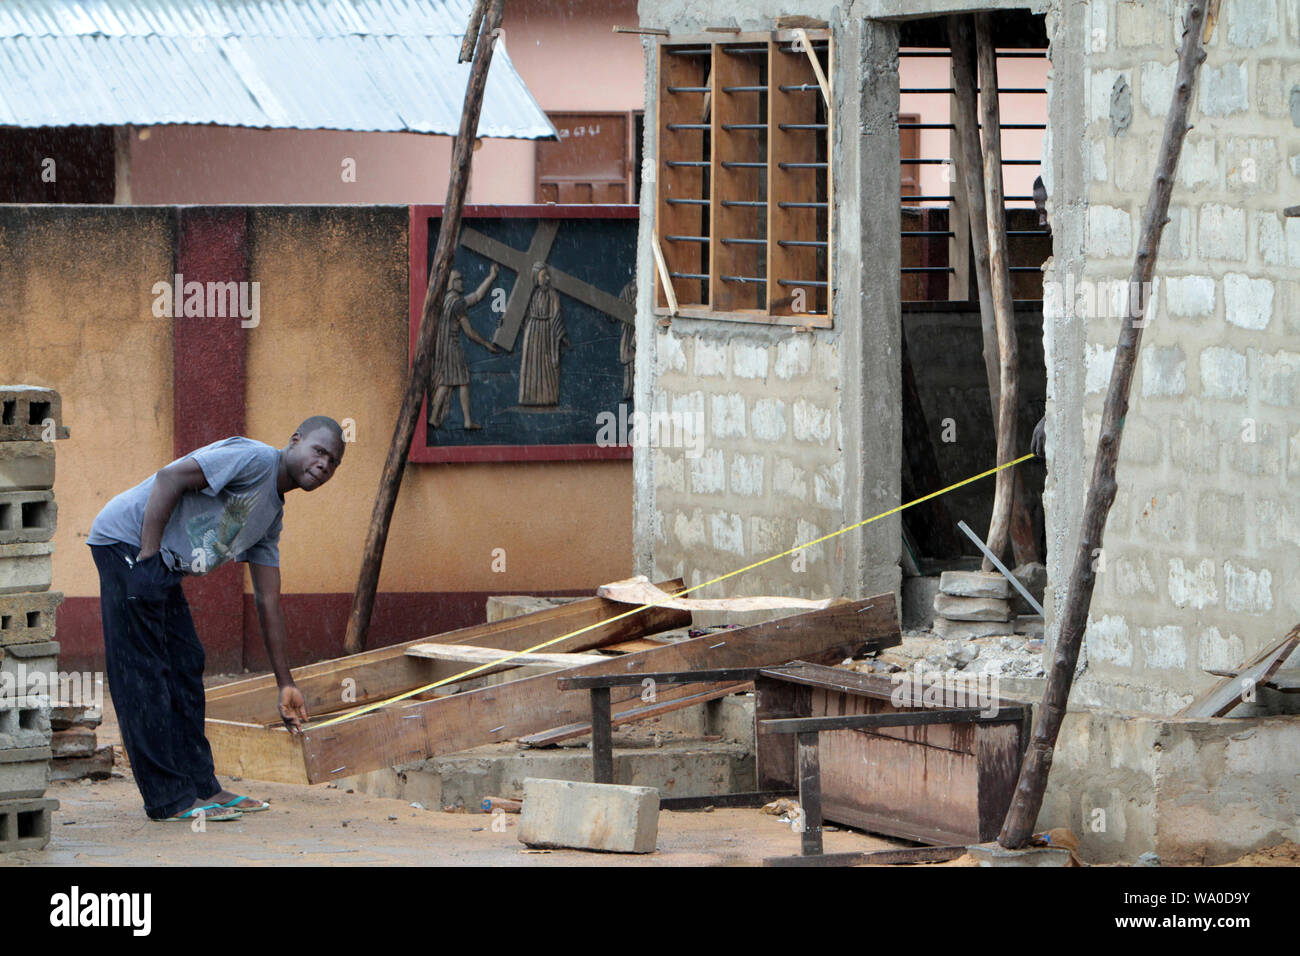 Ouvrier travaillant sur un de Bau chantier. Ouidah. Bénin. /Arbeiter arbeiten auf einer Baustelle. Ouidah. Benin. Stockfoto